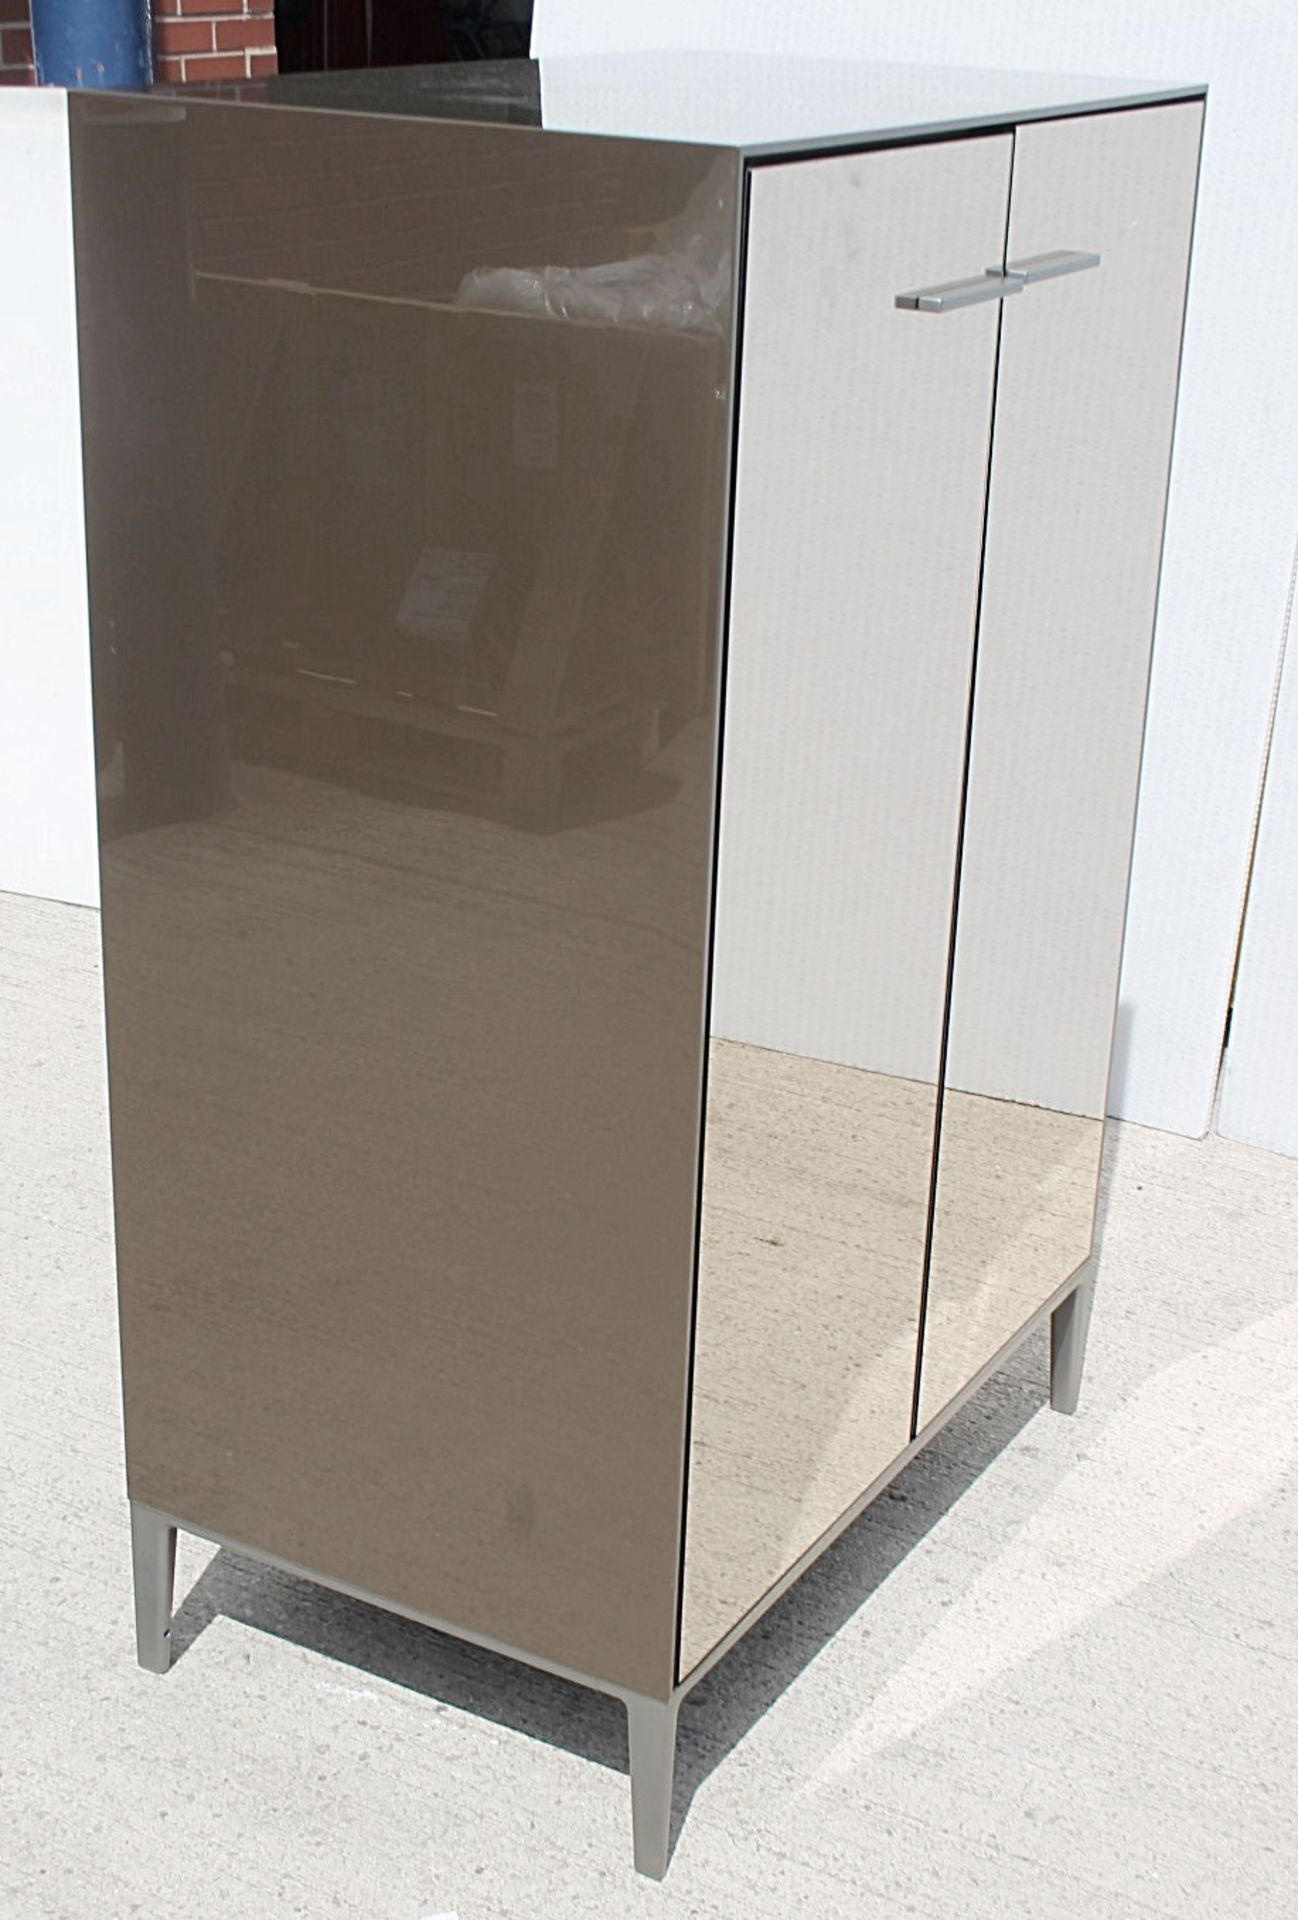 1 x B&B ITALIA 'Eucalipto' Designer 2-Door Illuminated Storage Unit With Bronzed Mirror Fronted - Image 5 of 7